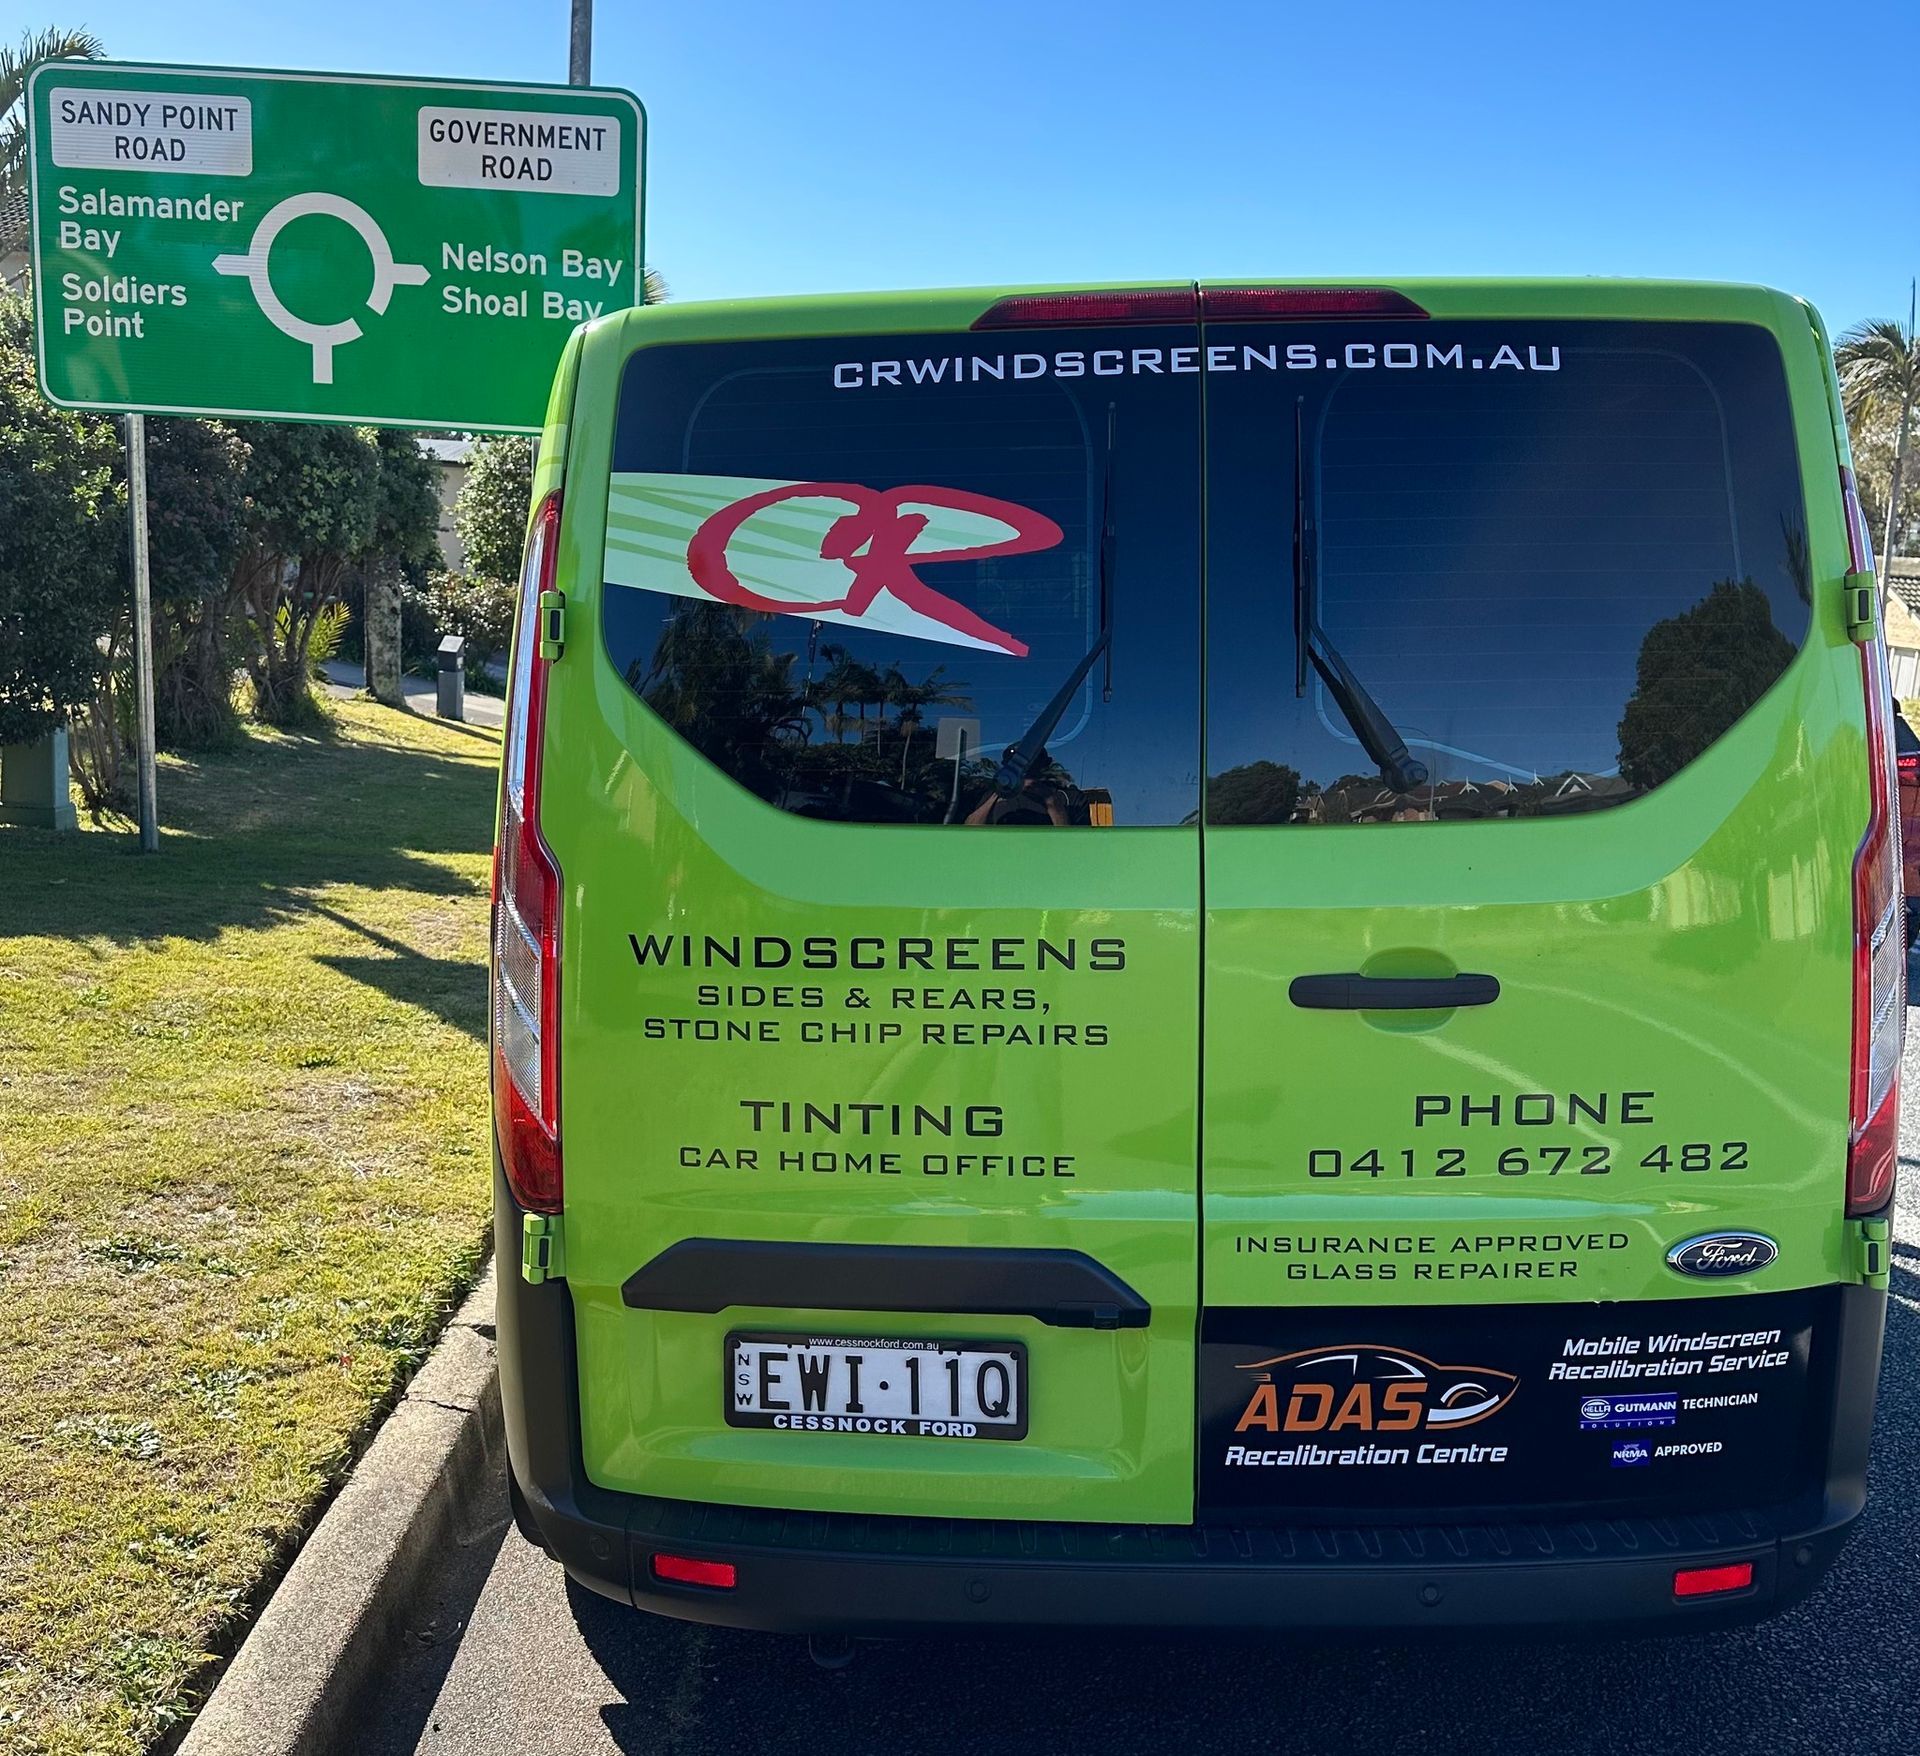 Green Van with Professionally Tinted Windows — Window Tinting Near Me in Australia